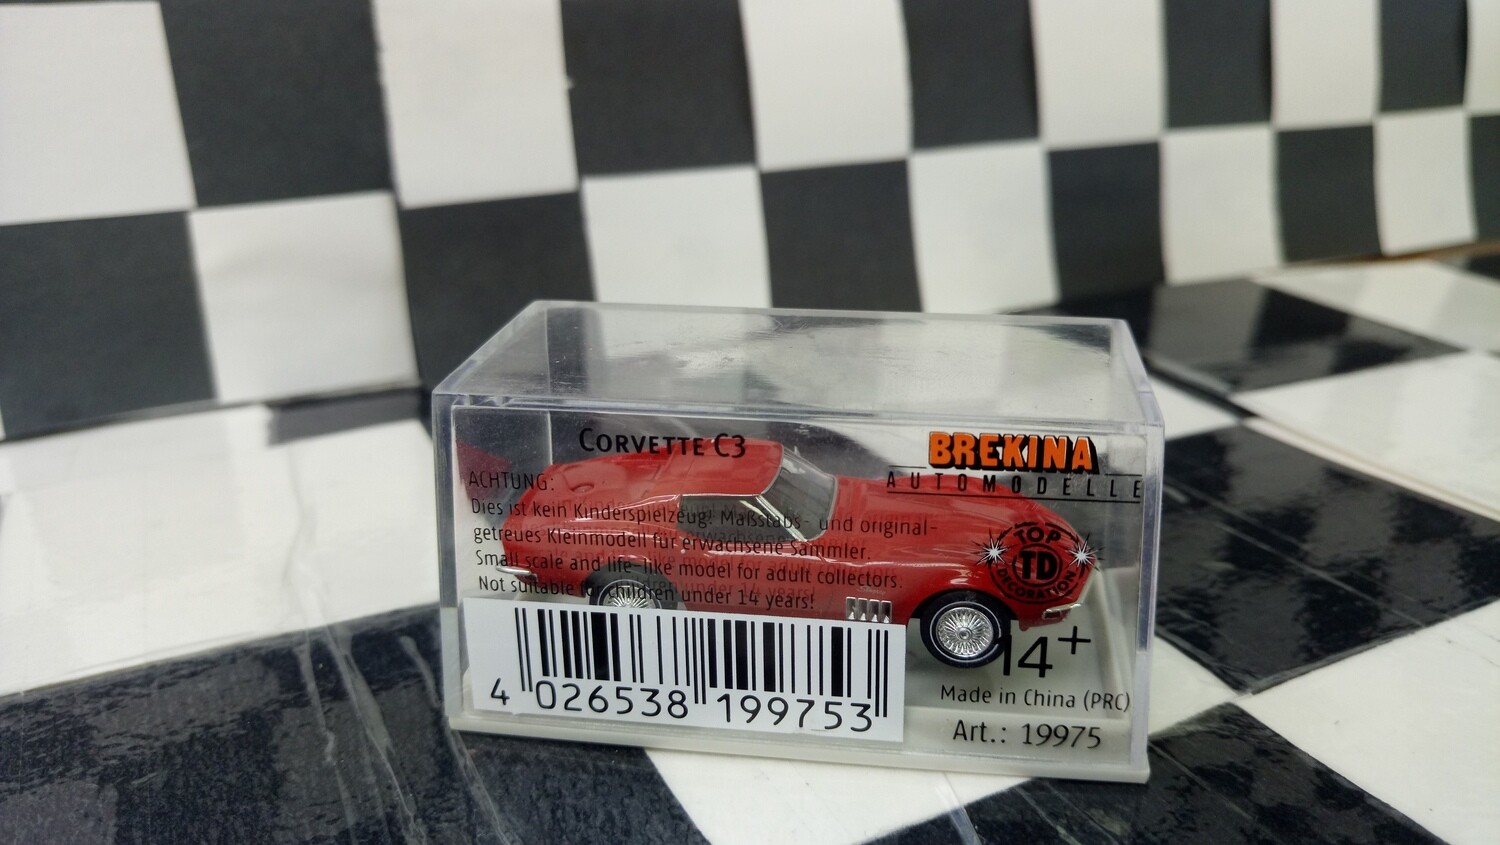 1:87 Brekina Corvette C3, Red, #19975